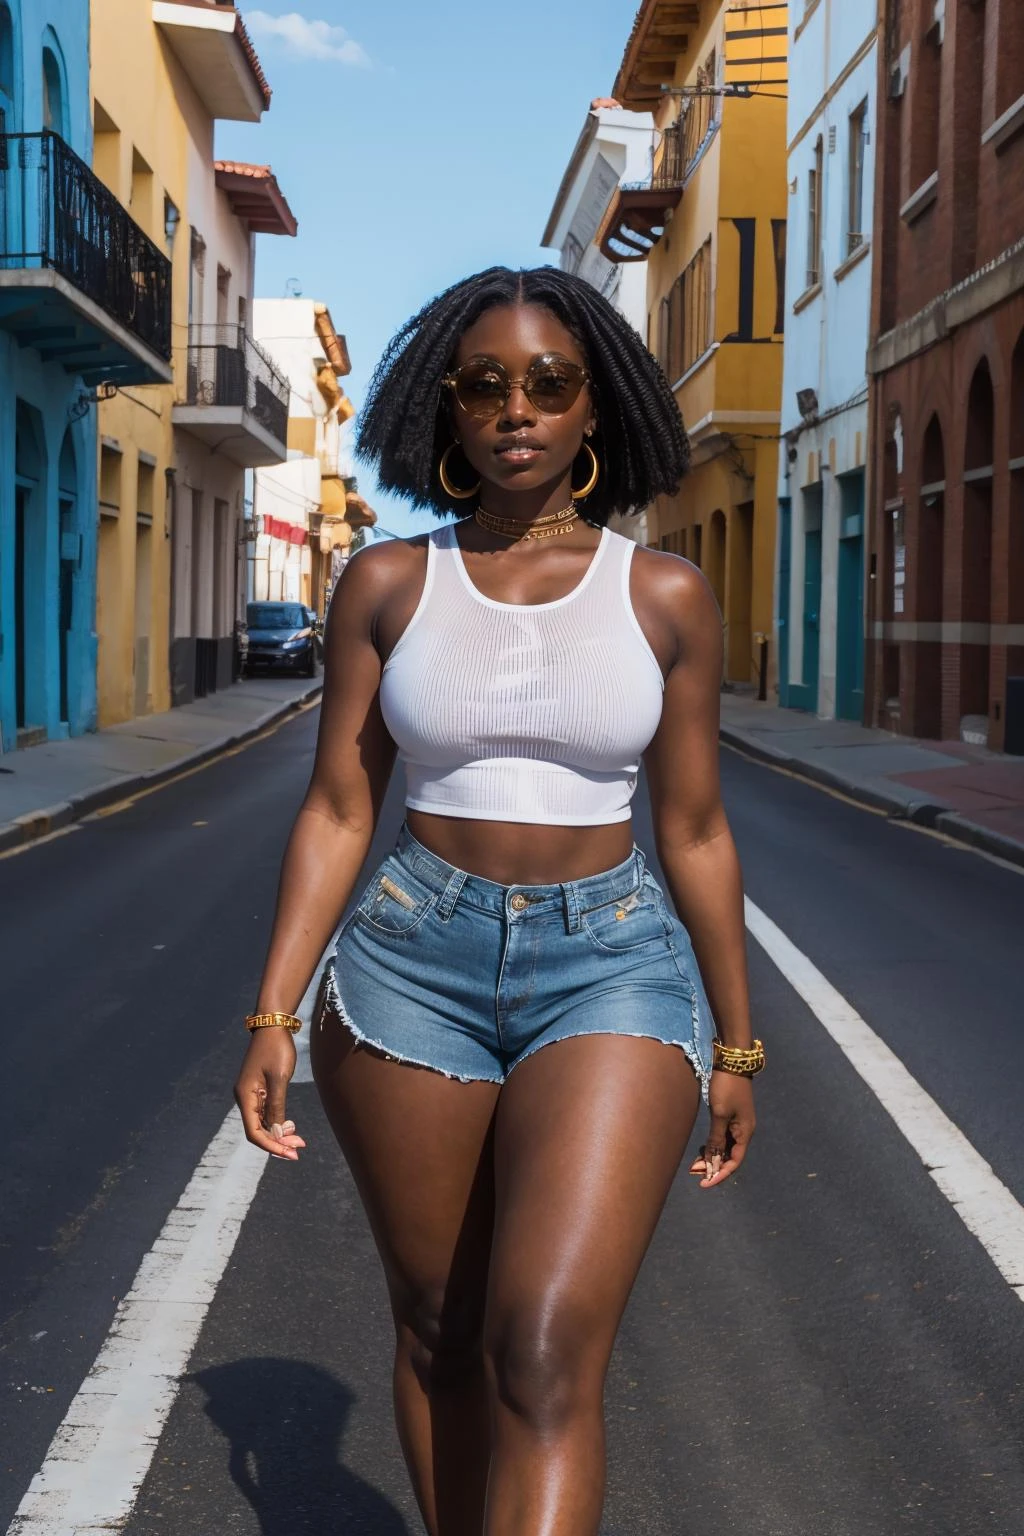 melanin, a woman, [cleavage|curvy|big ass|skinny], wearing streetwear, walking in amrican ghetto 